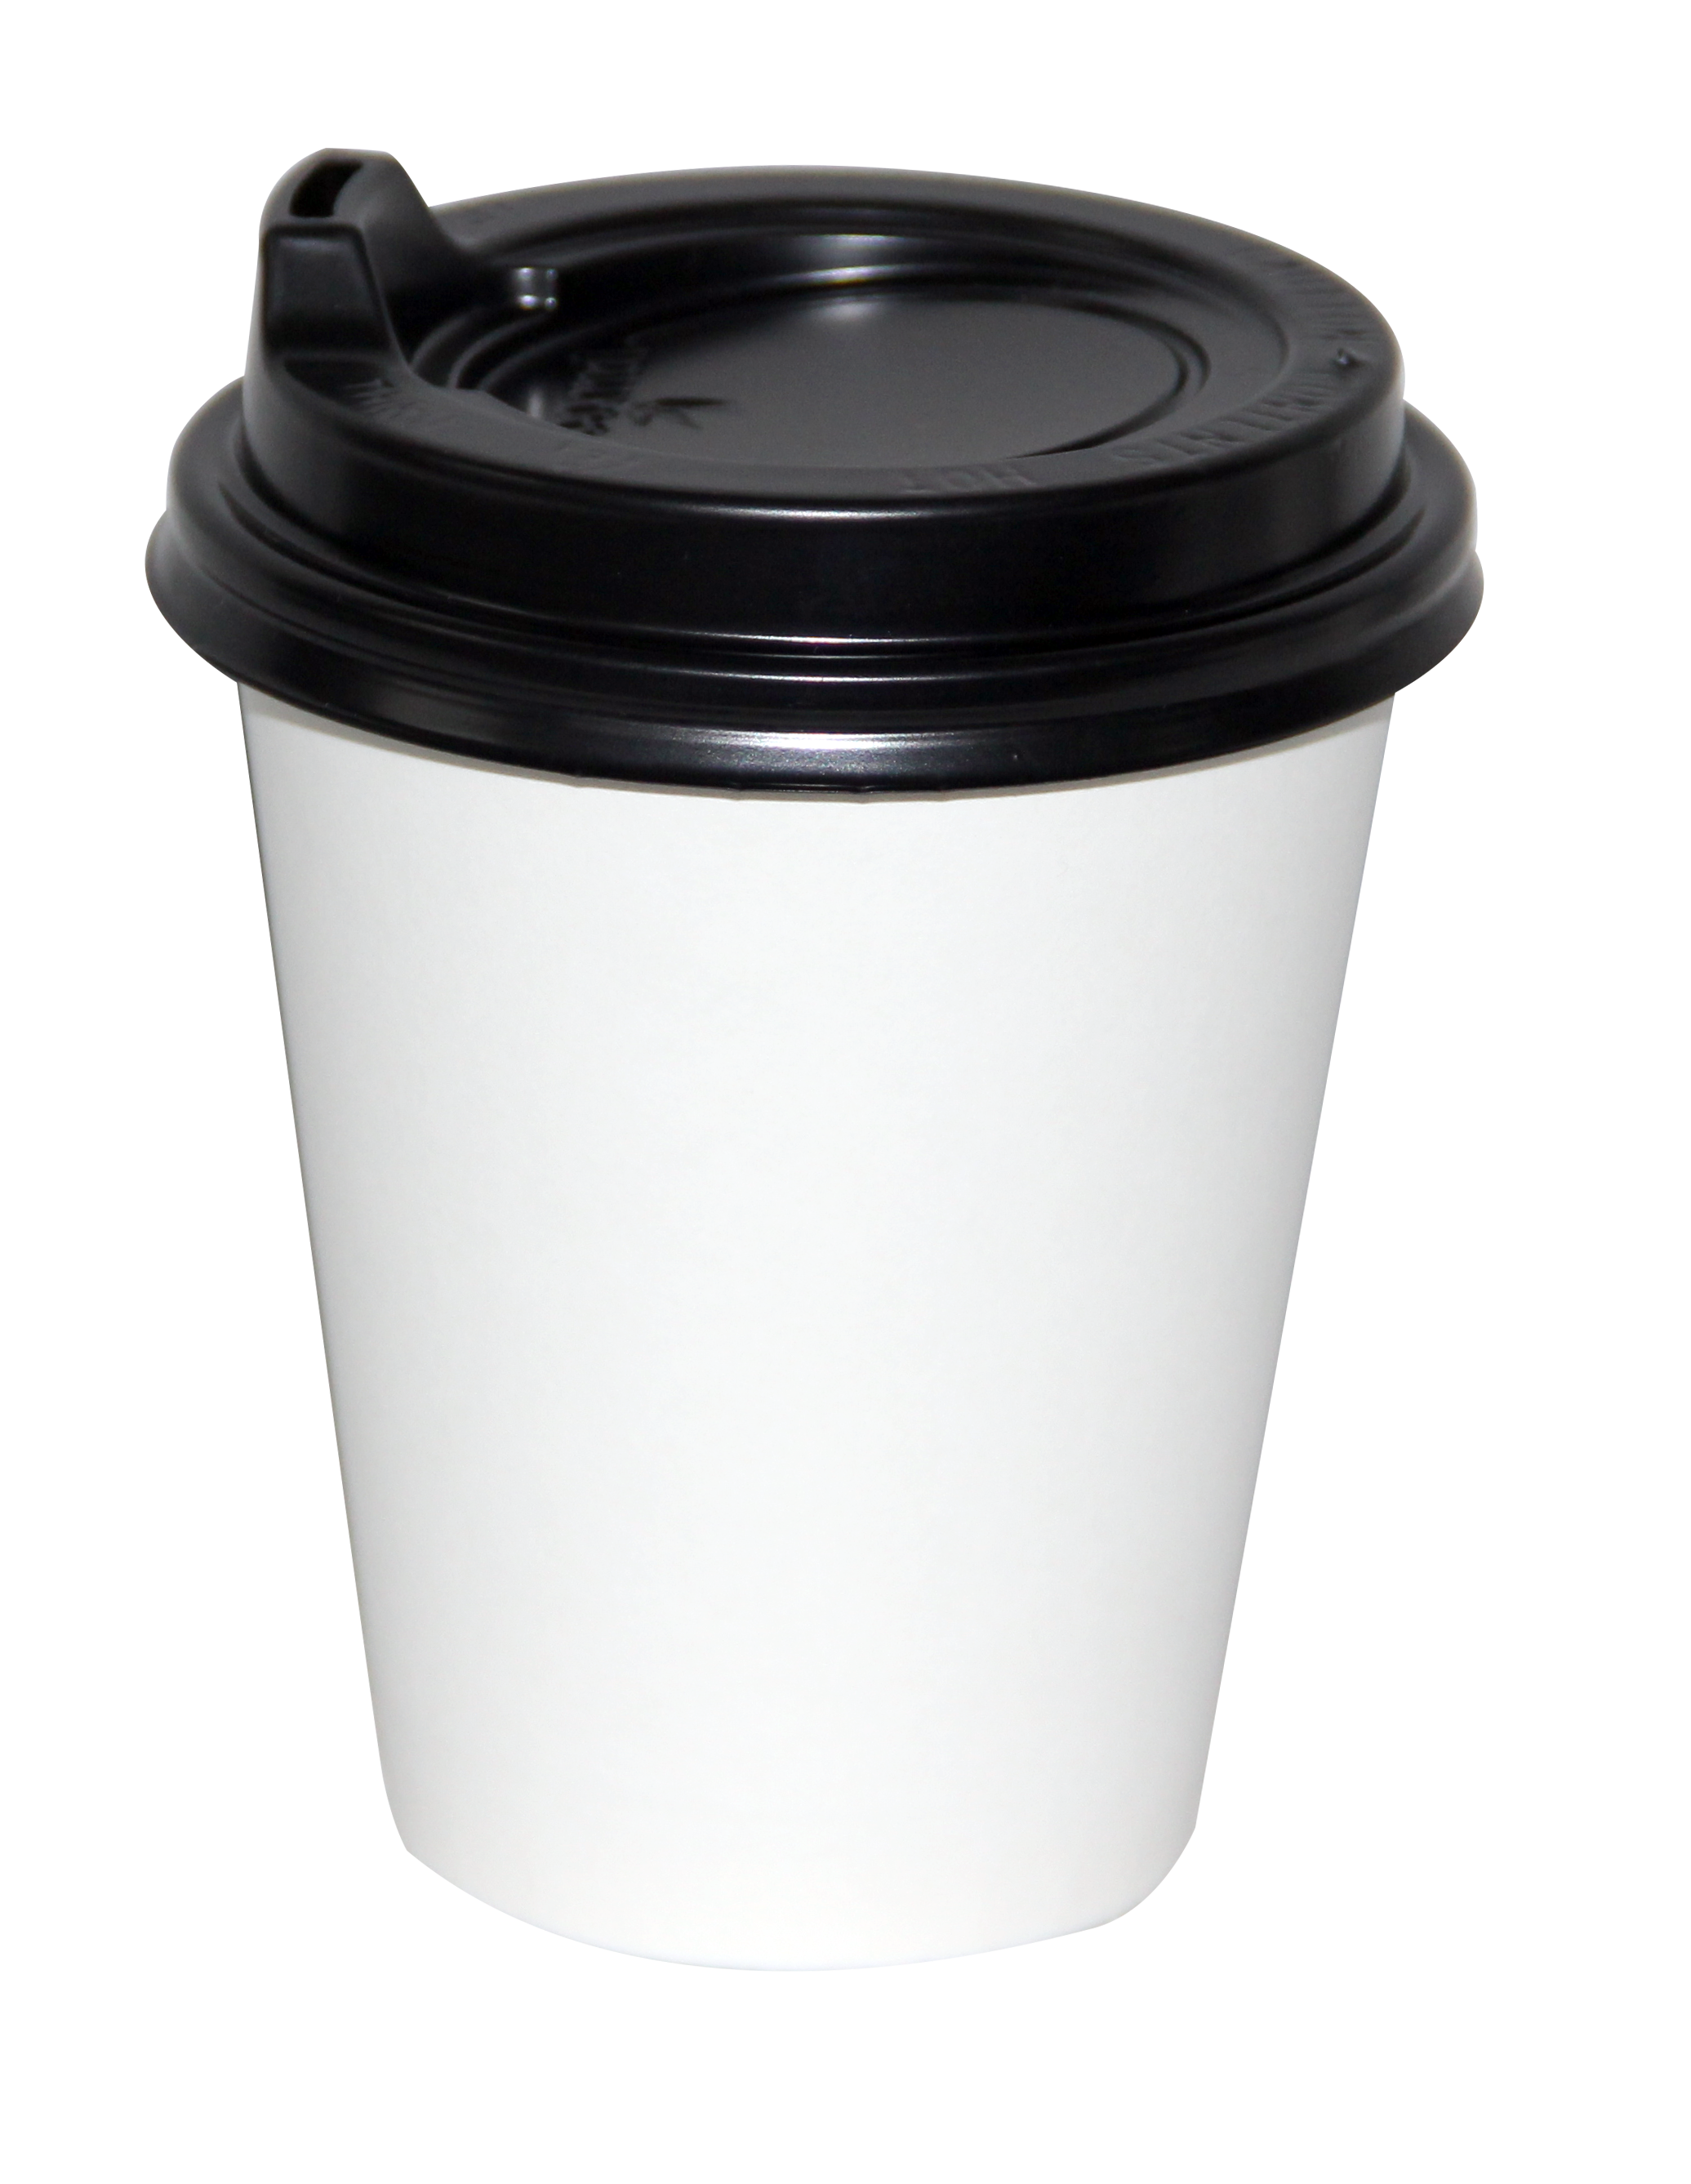 Velta White 12oz Single Wall Coffee Cup